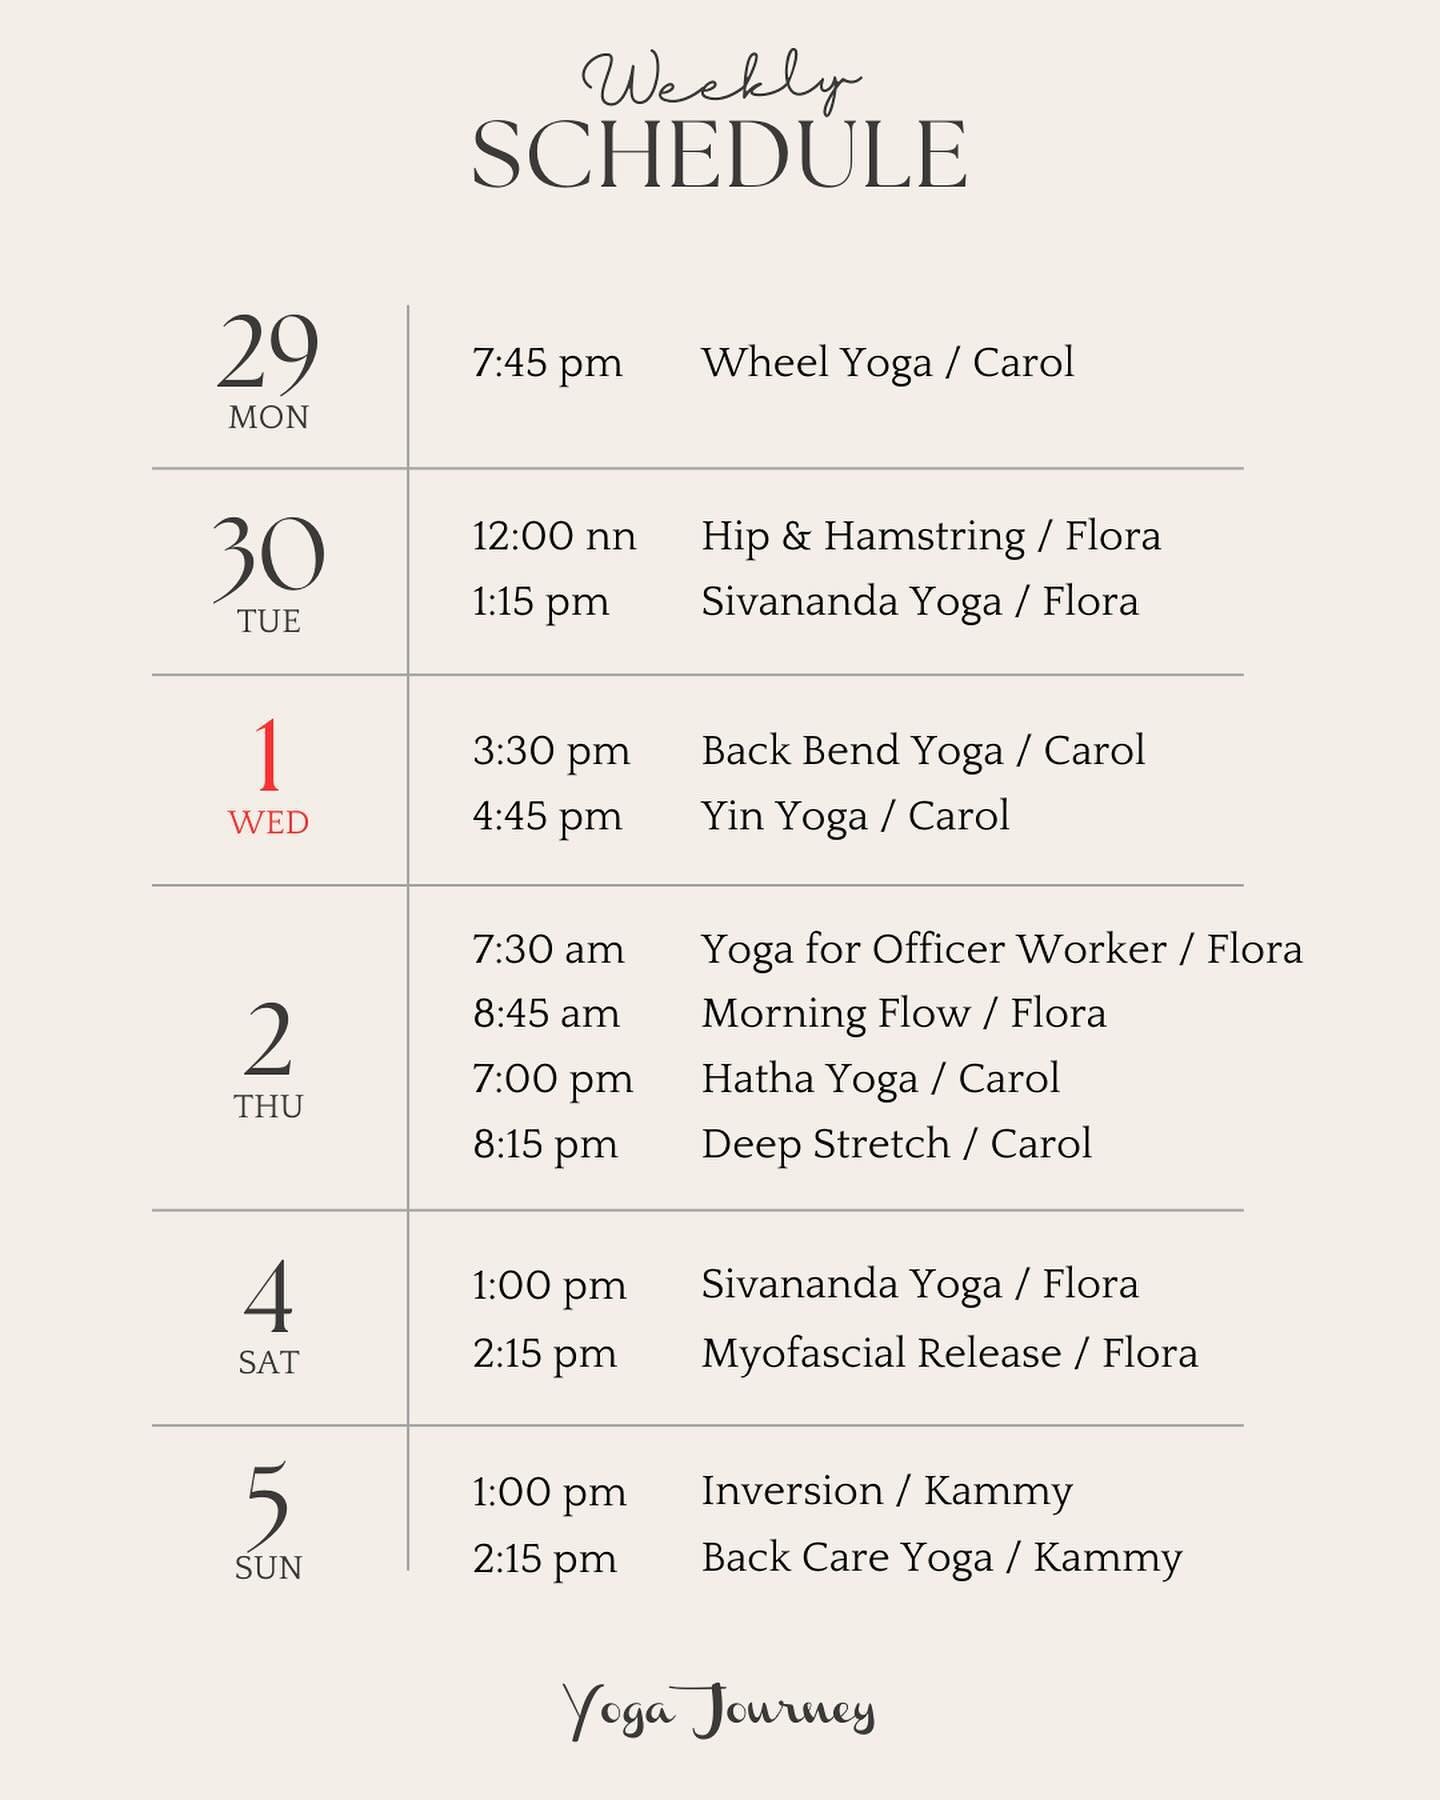 May 1st - 12th Class Schedule ✨🧘🏻 Book your class on Mindbody or whatsapp to +852 5501-1254.

#hkyoga #hkyogastudio #hkyogateacher #sheungwanyoga #yogajourney #hathayoga #vinyasayoga #inversionyoga #wheelyoga #backbend #yinyoga #backpainrelief #myo